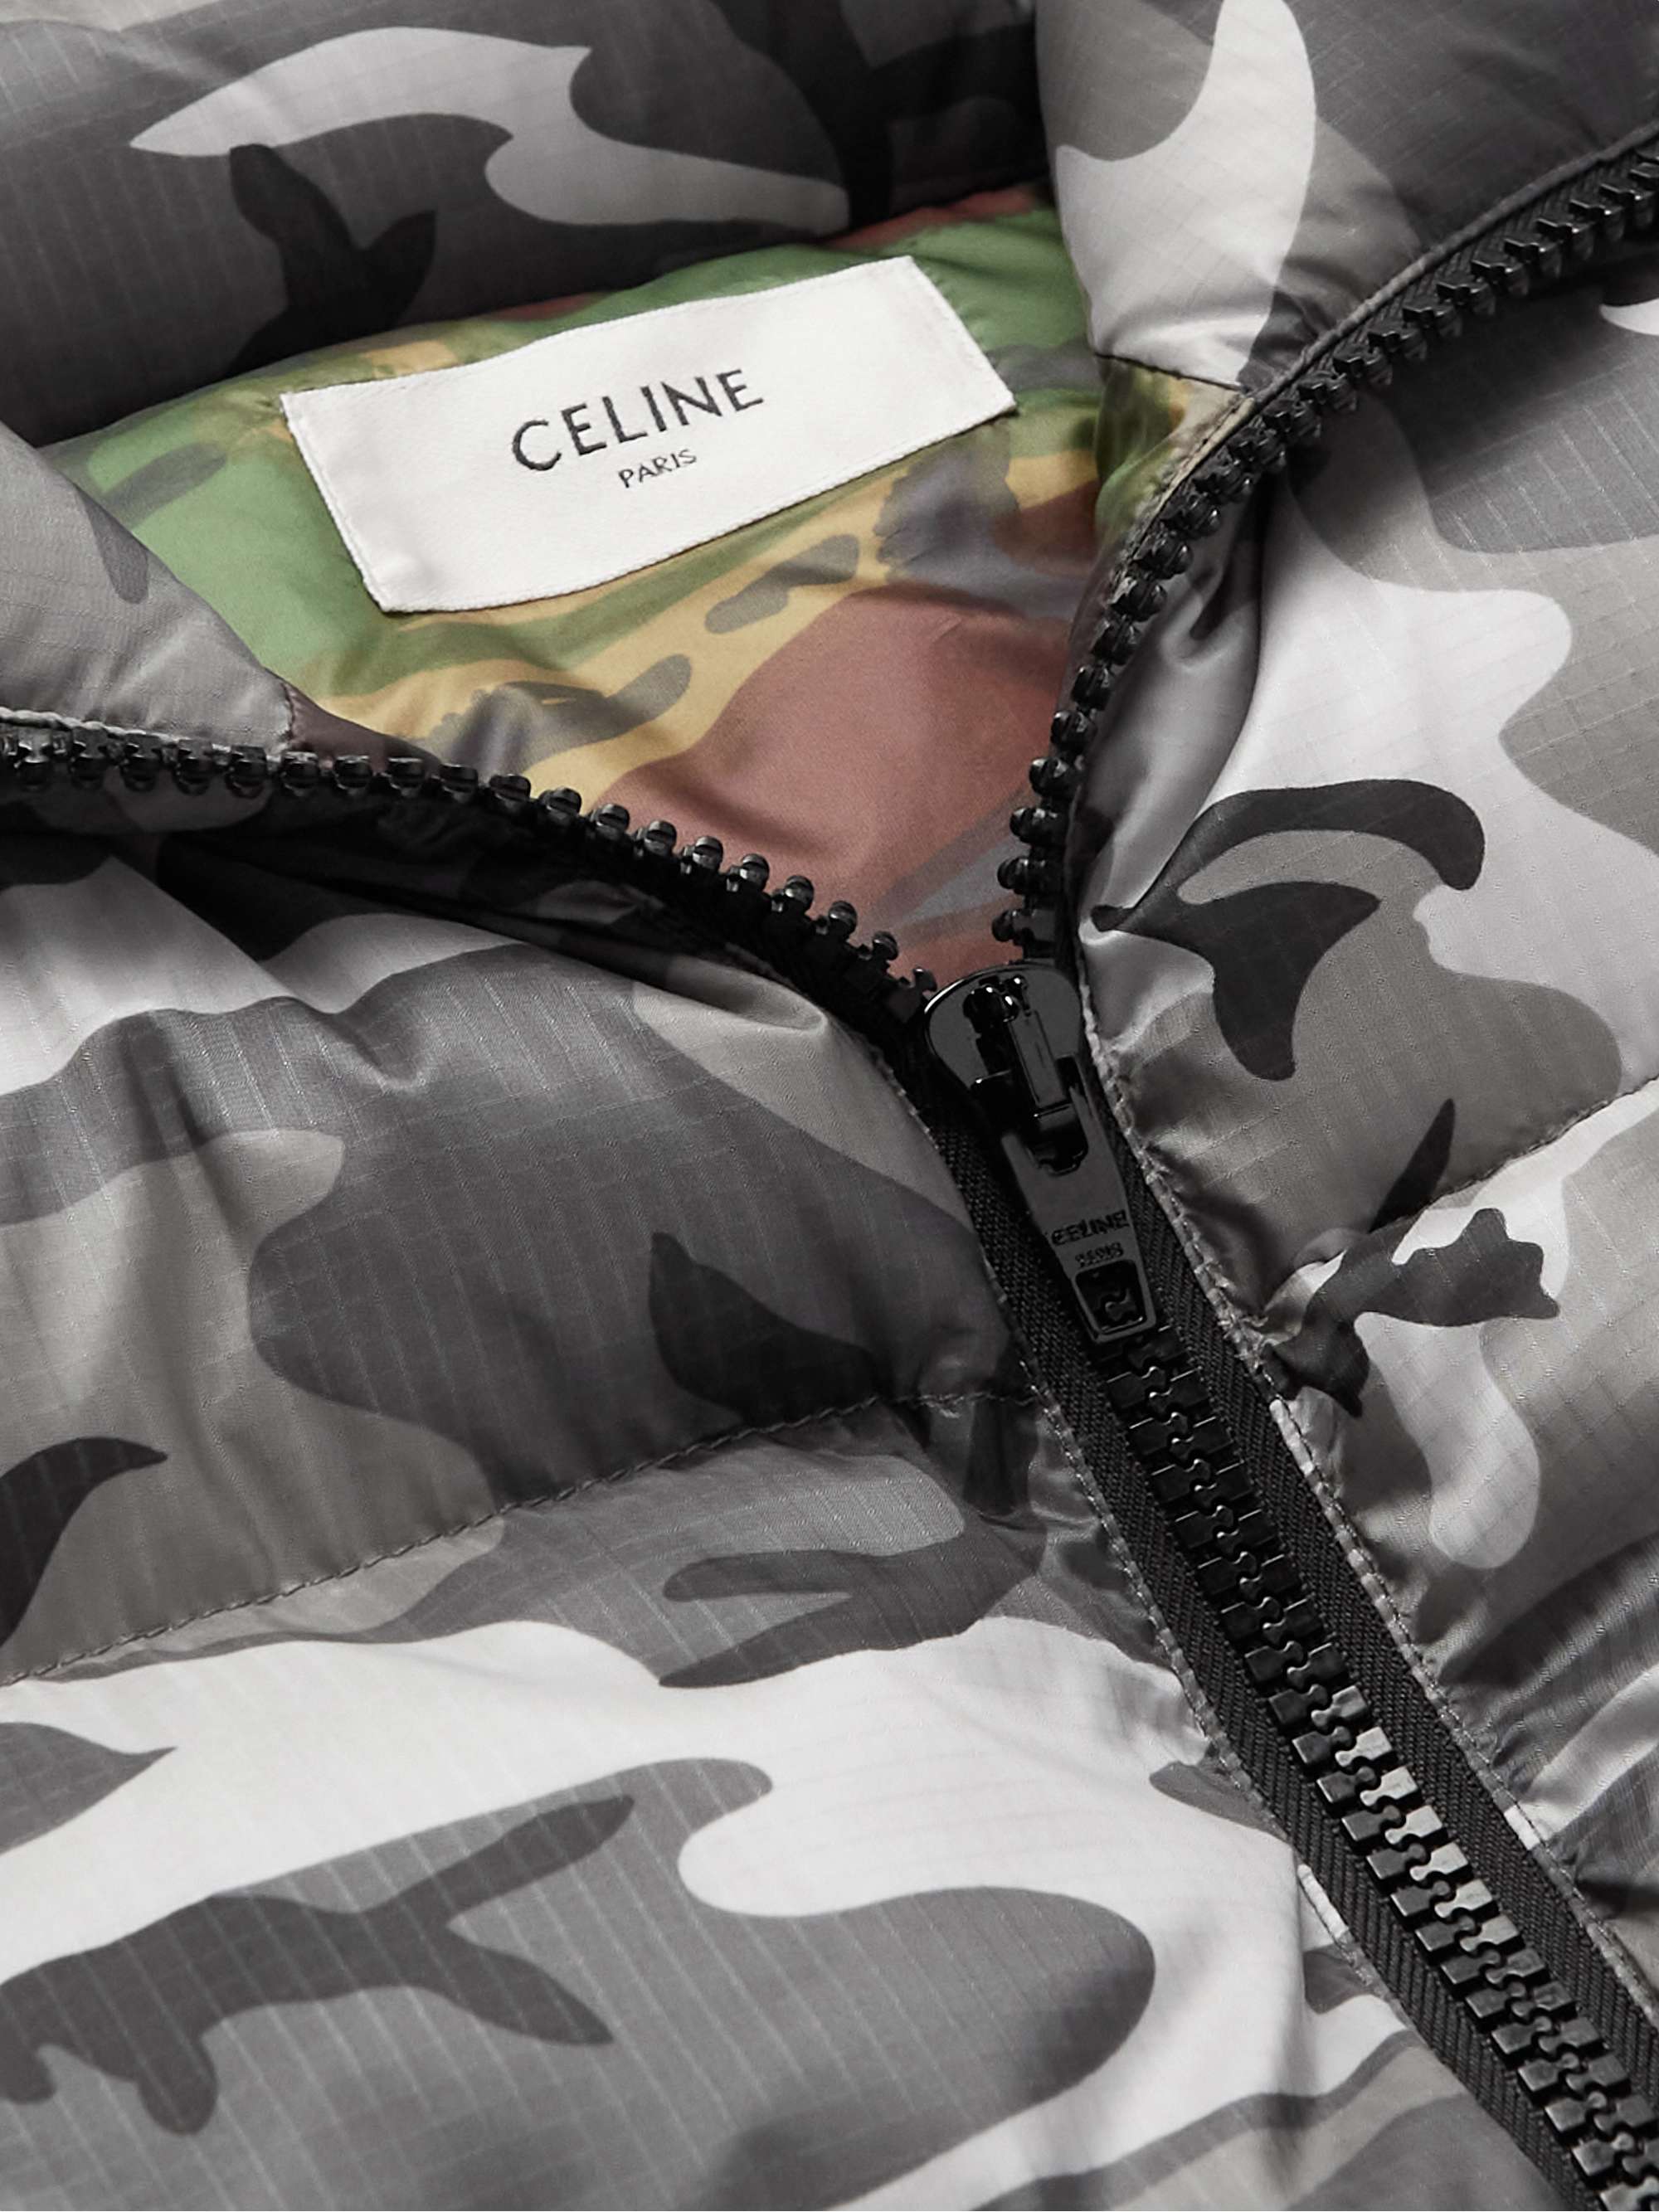 CELINE HOMME Camouflage-Print Nylon-Ripstop Down Jacket